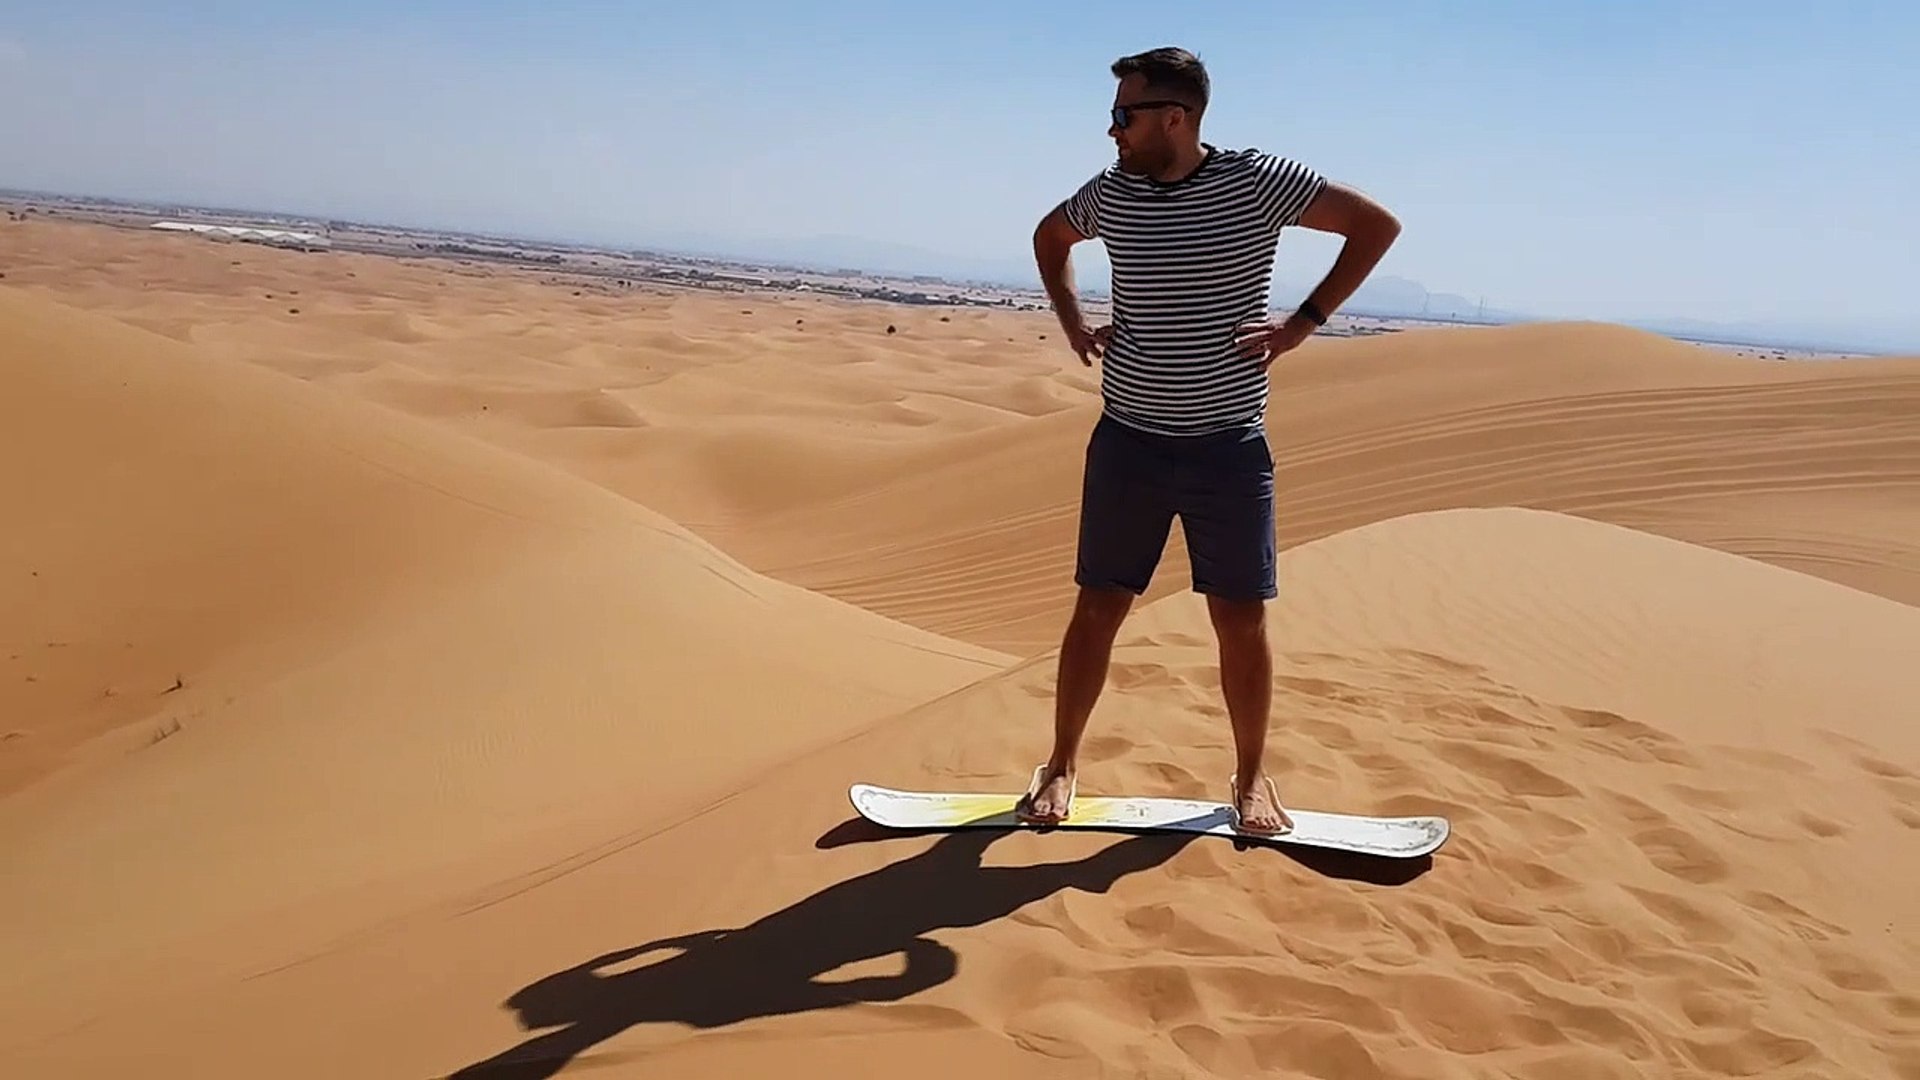 Get Best dubai holiday packages on Sand surfing & City Tour Dubai 2019